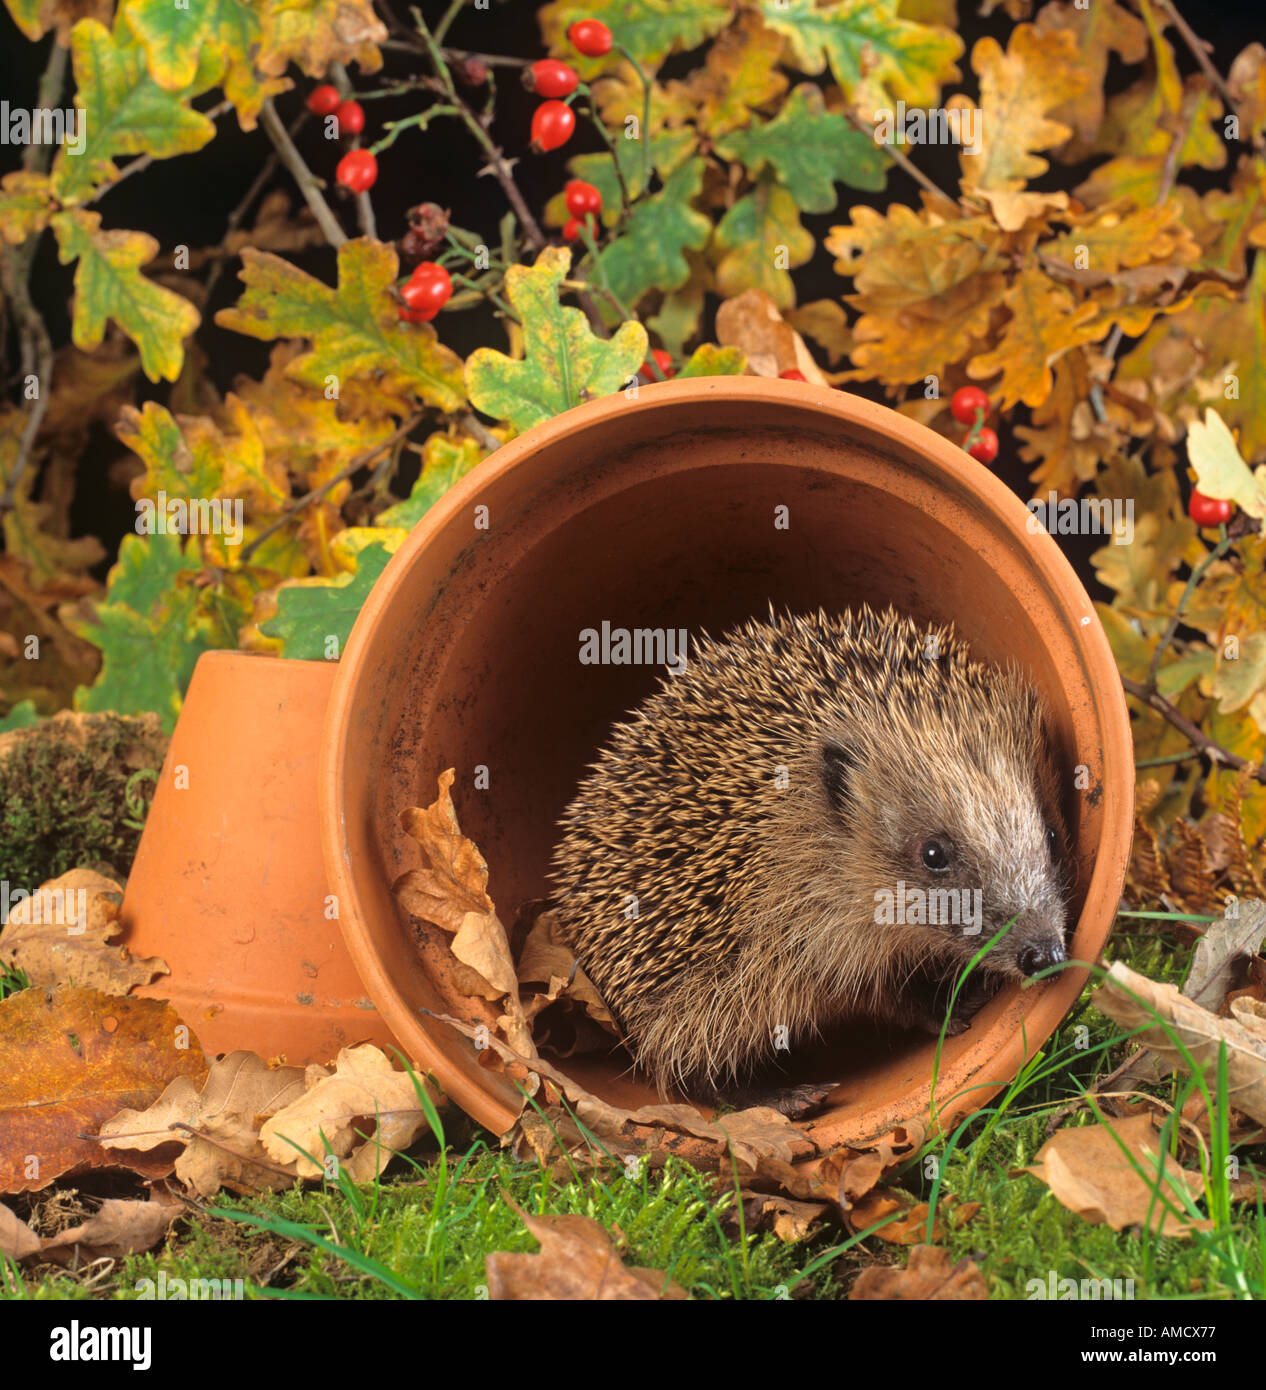 Hedgehog Erinaceus europaeus in garden scene Stock Photo